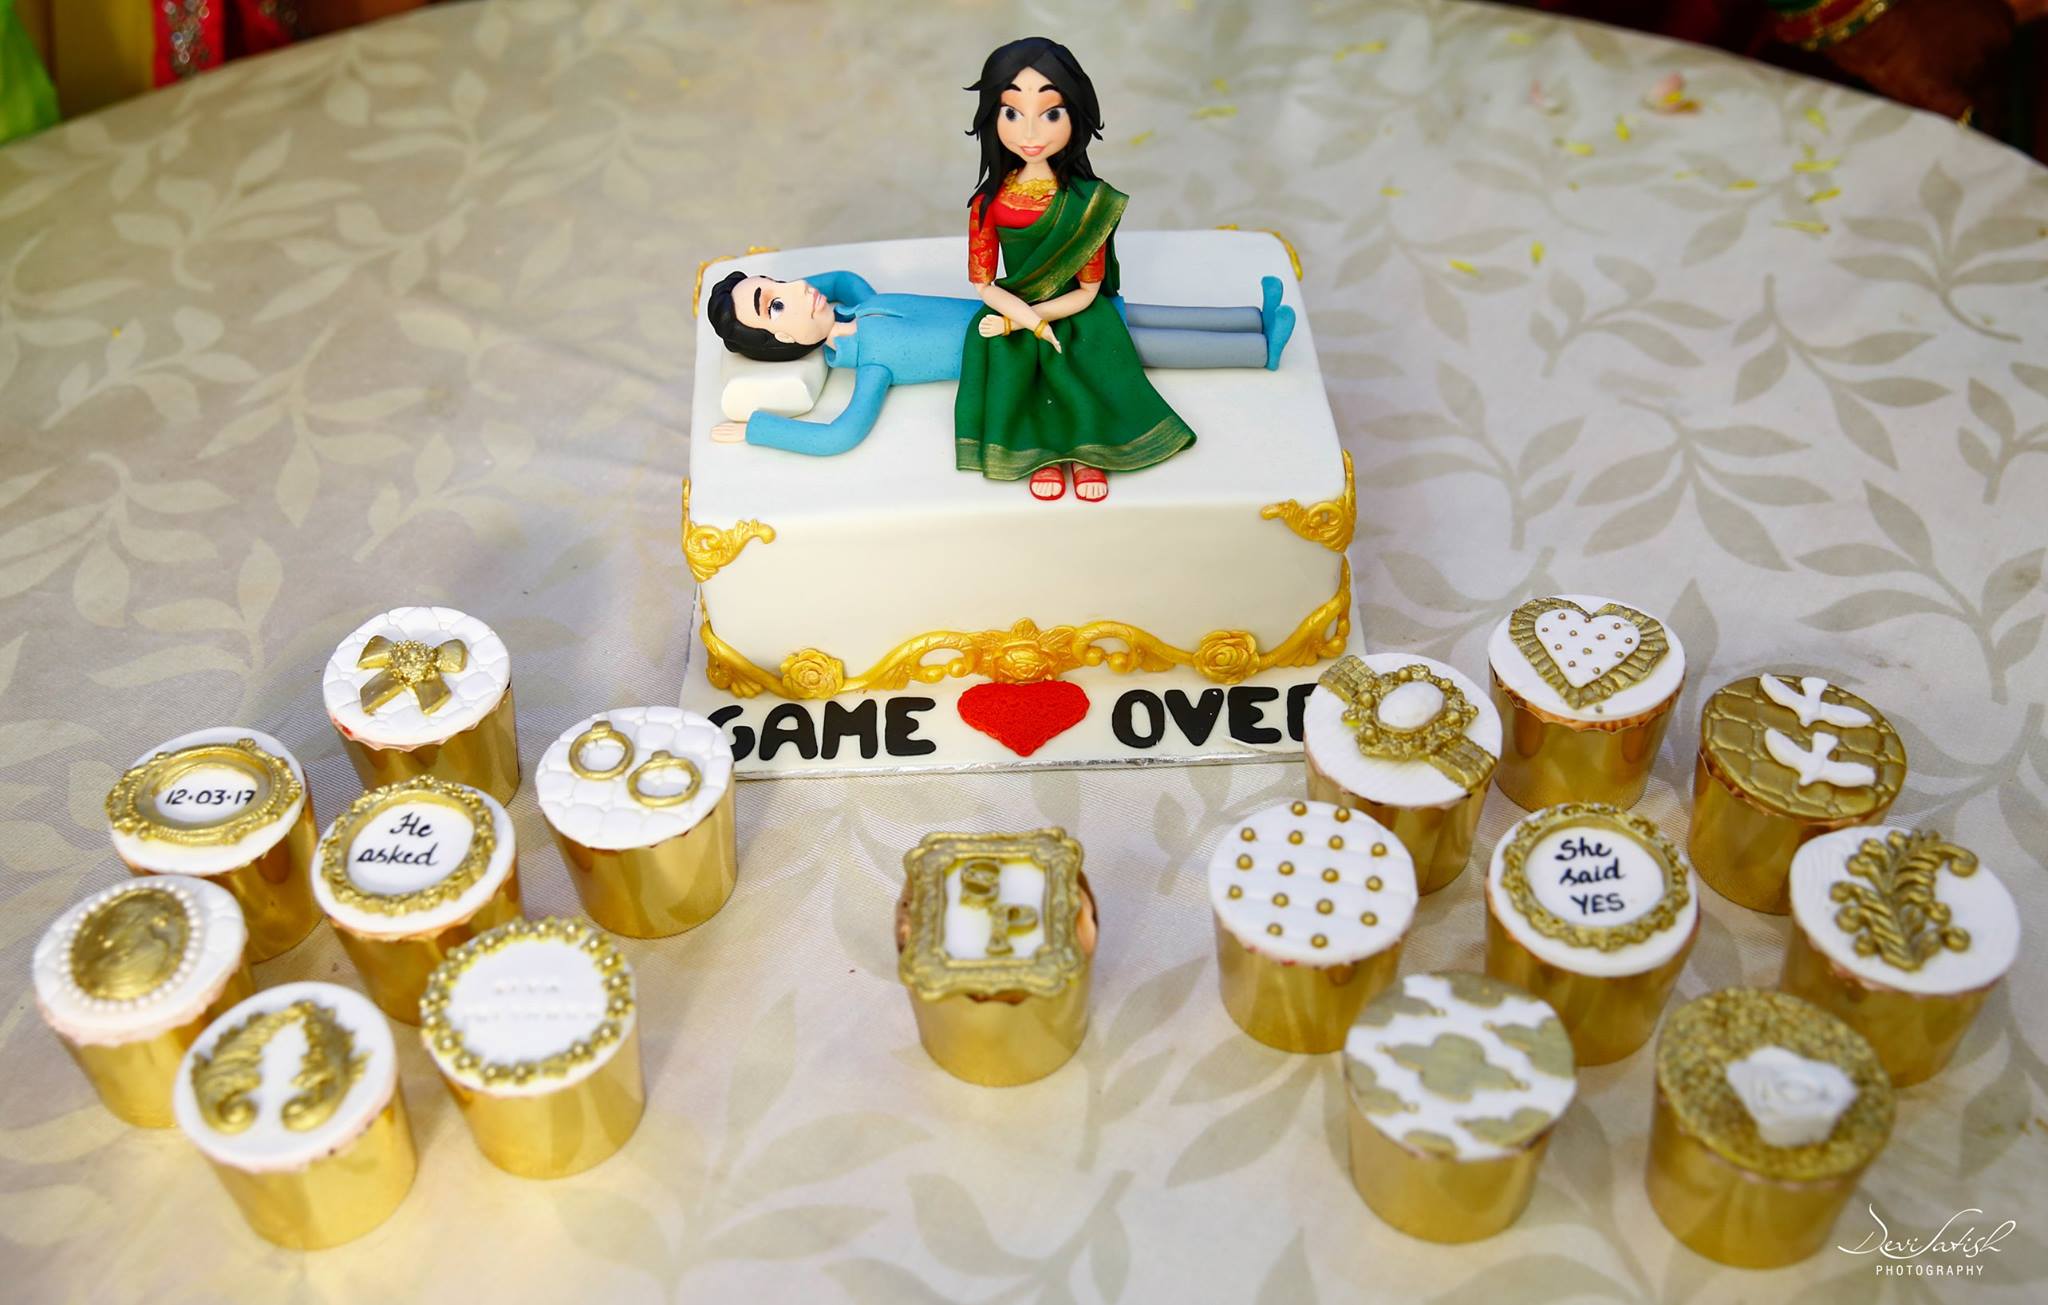 Game Over funny wedding cake